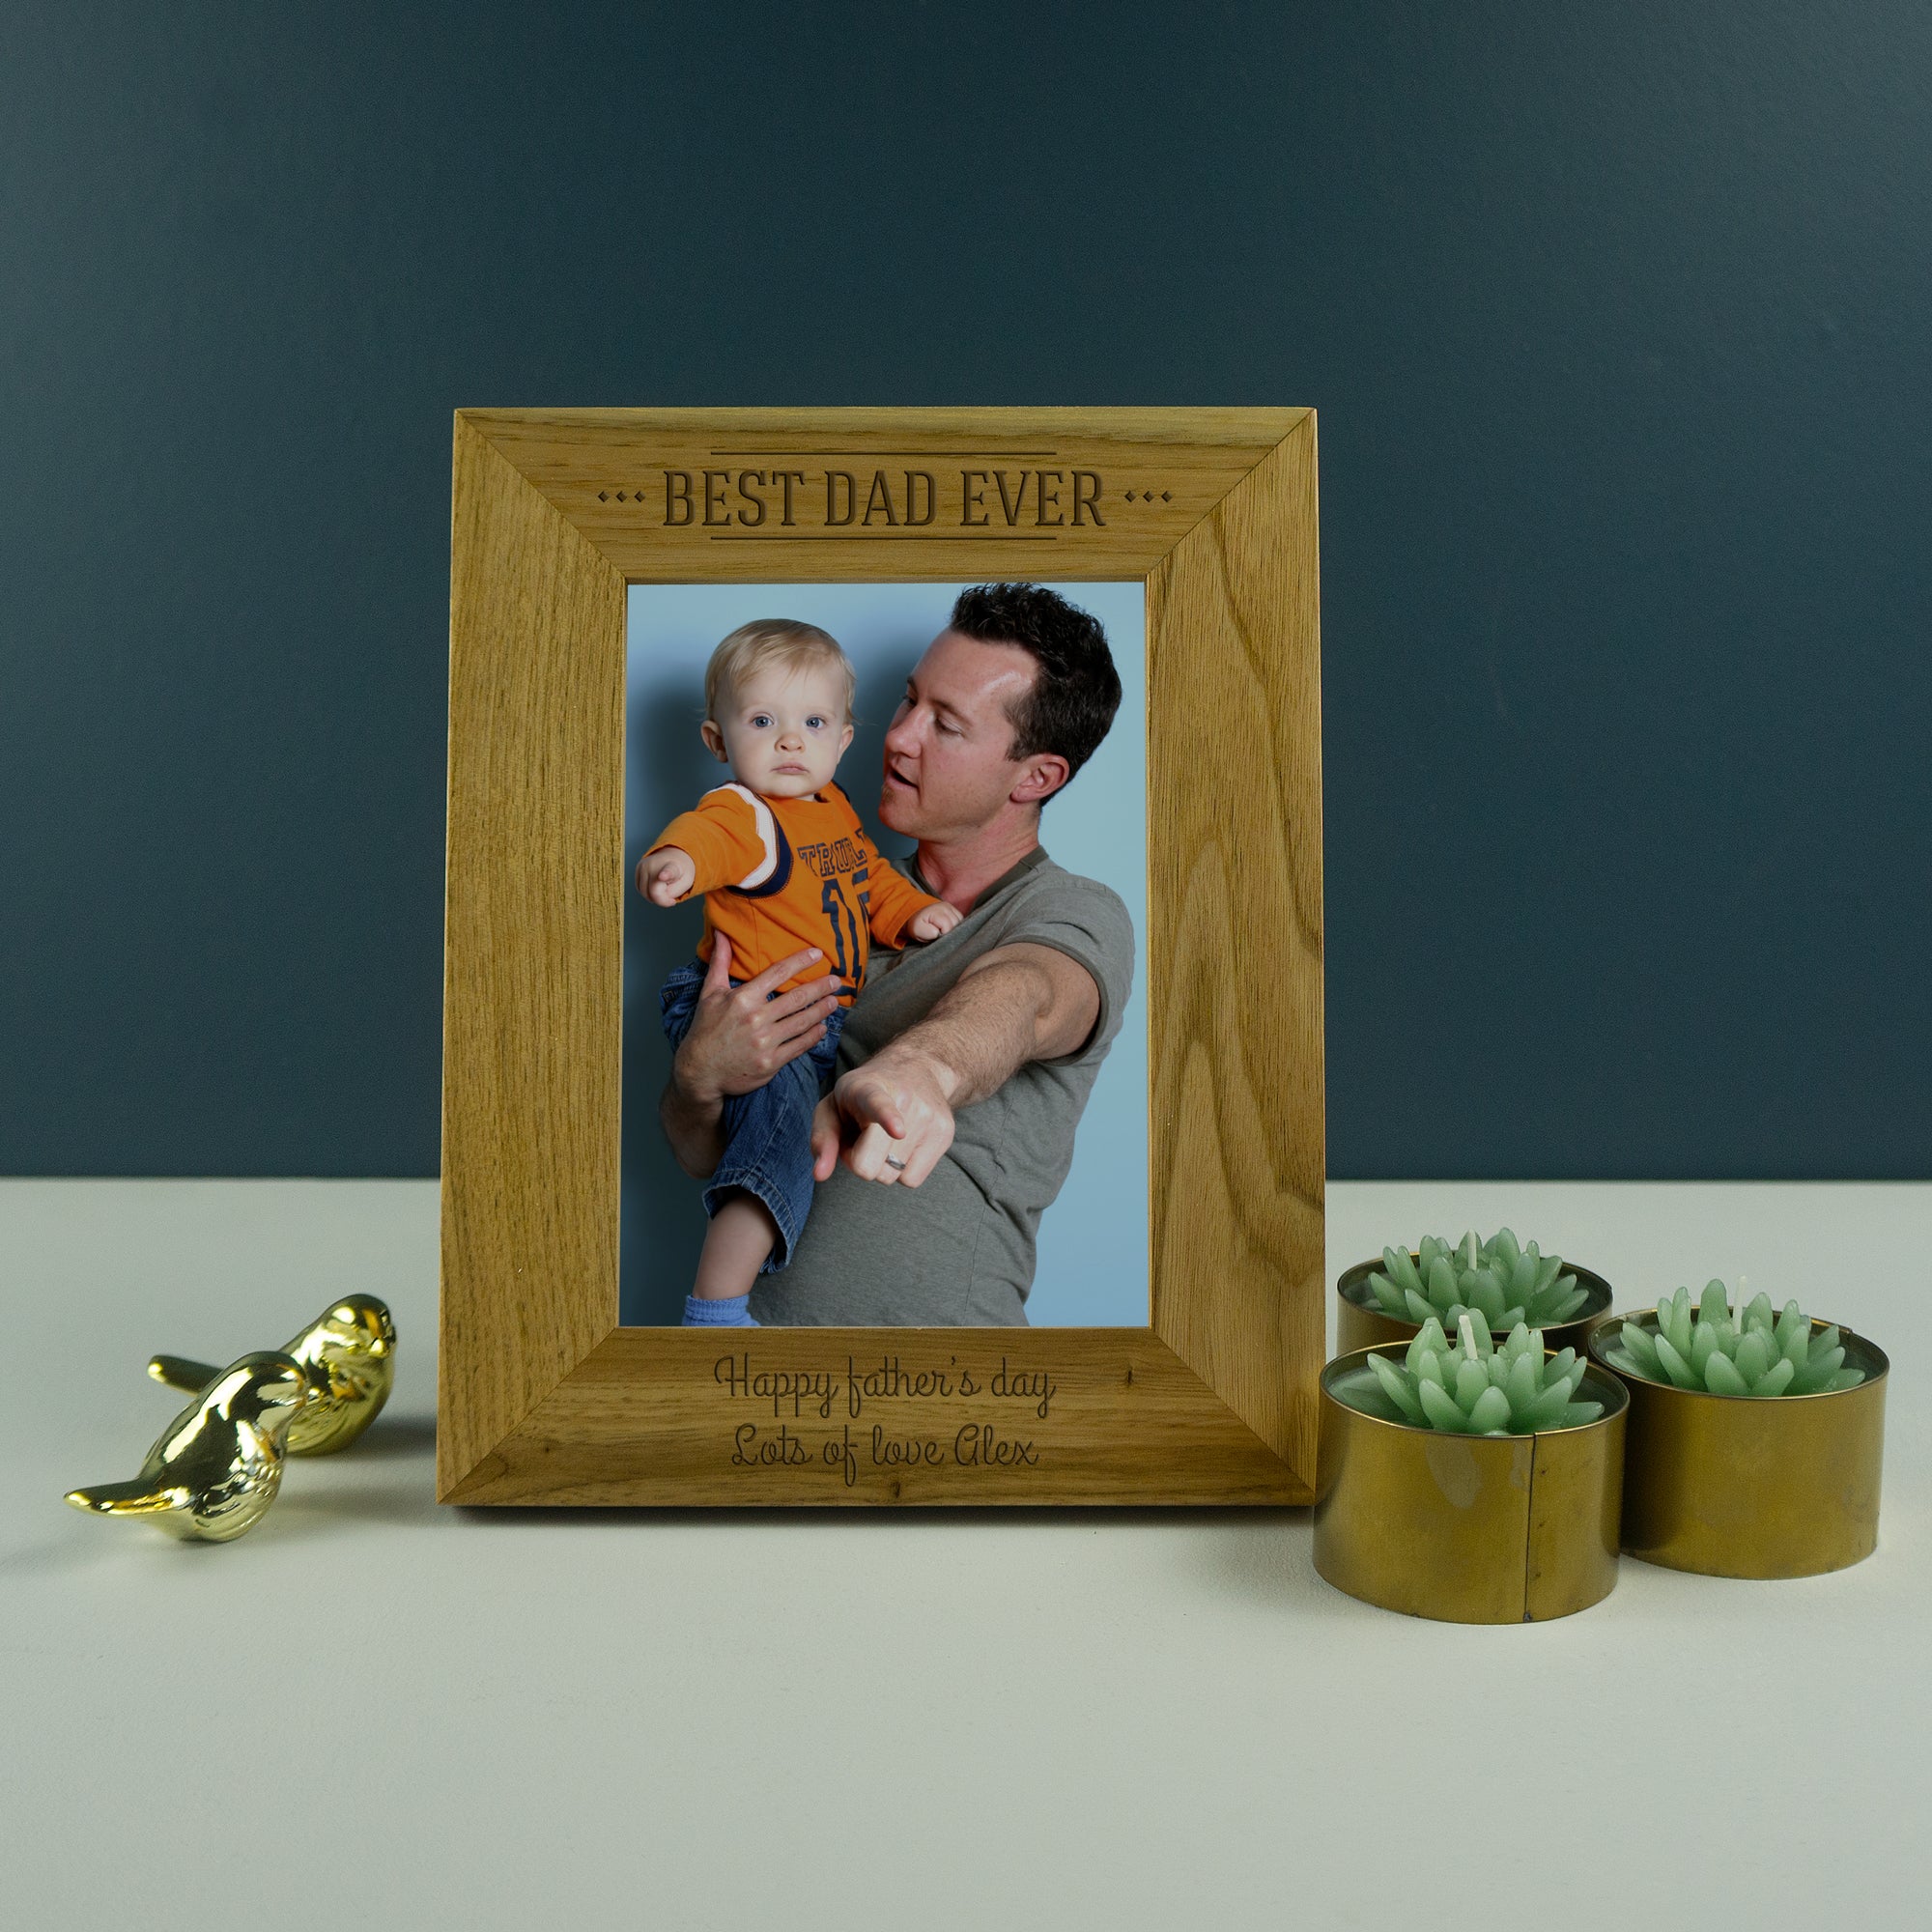 Best dad ever photo frame